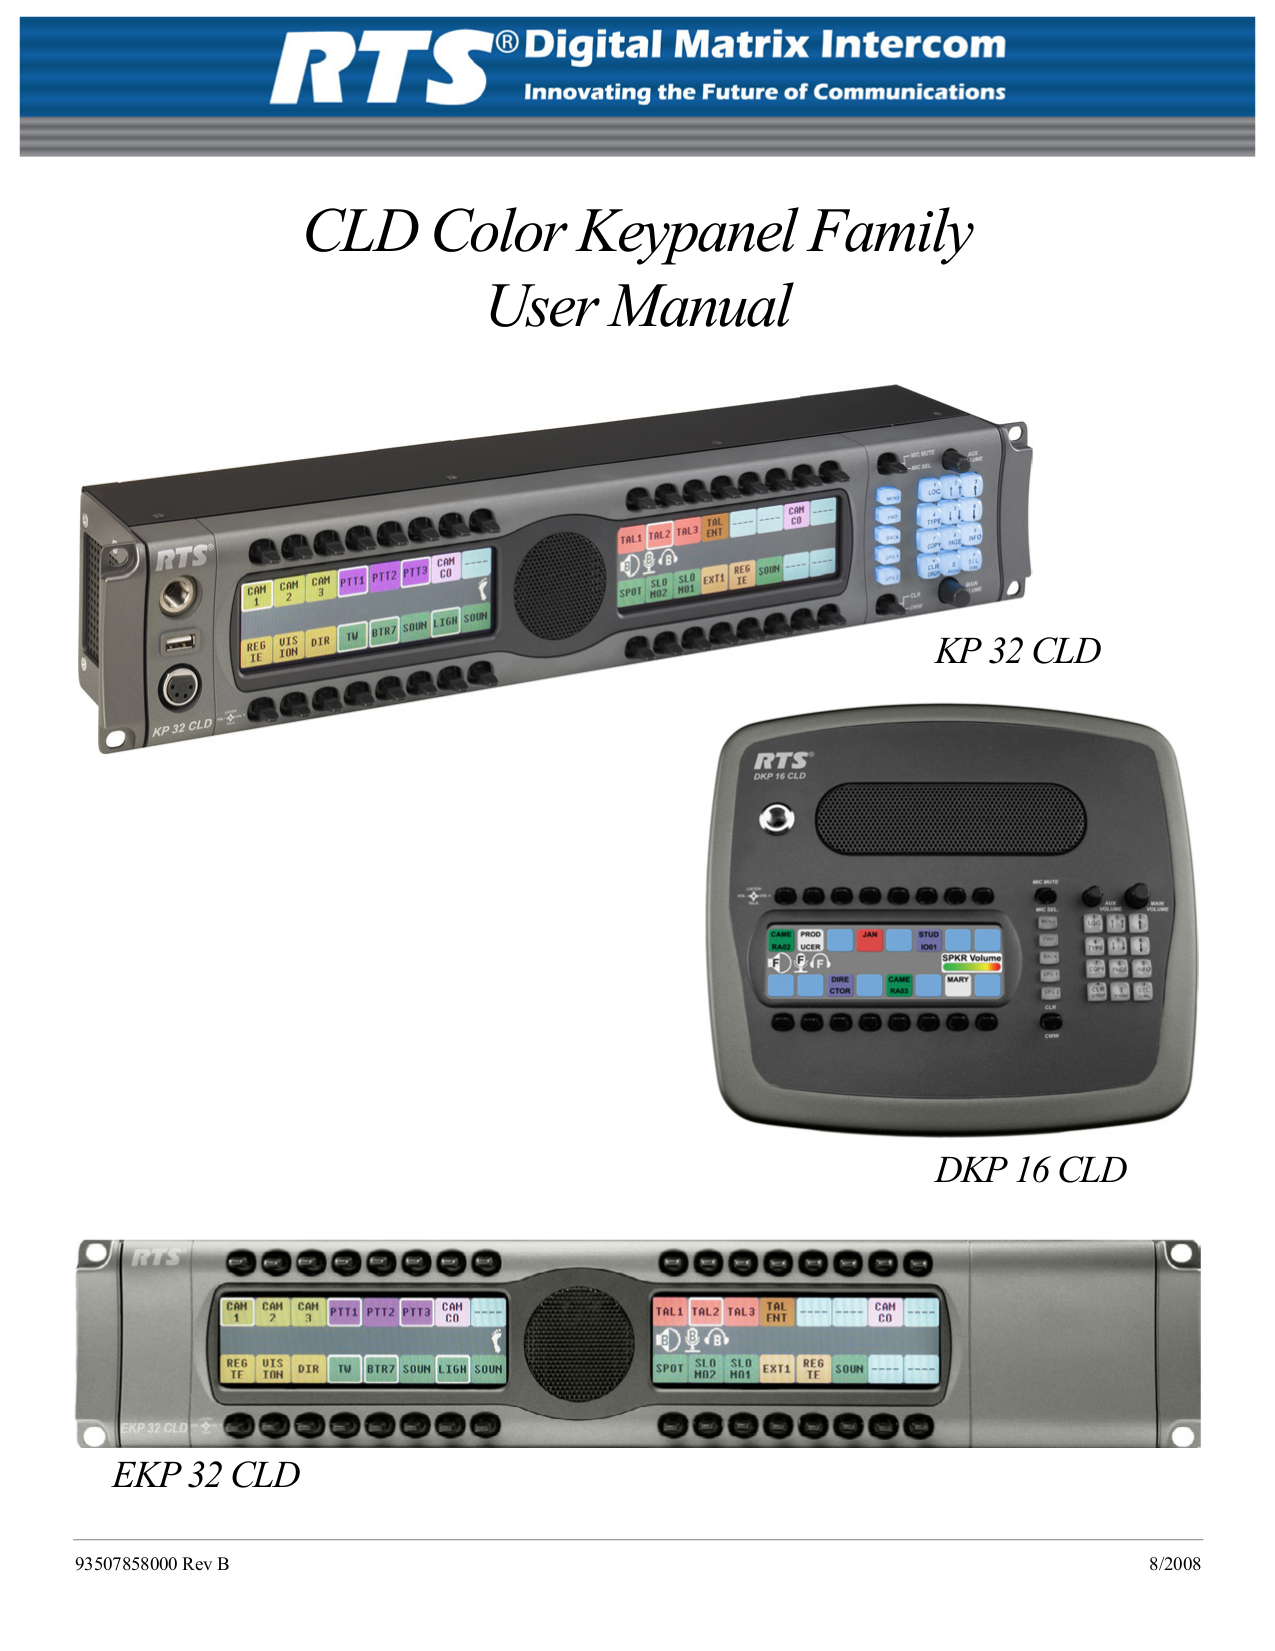 pdf for Telex Other XCP-40-RJ11 IntercomSystem manual